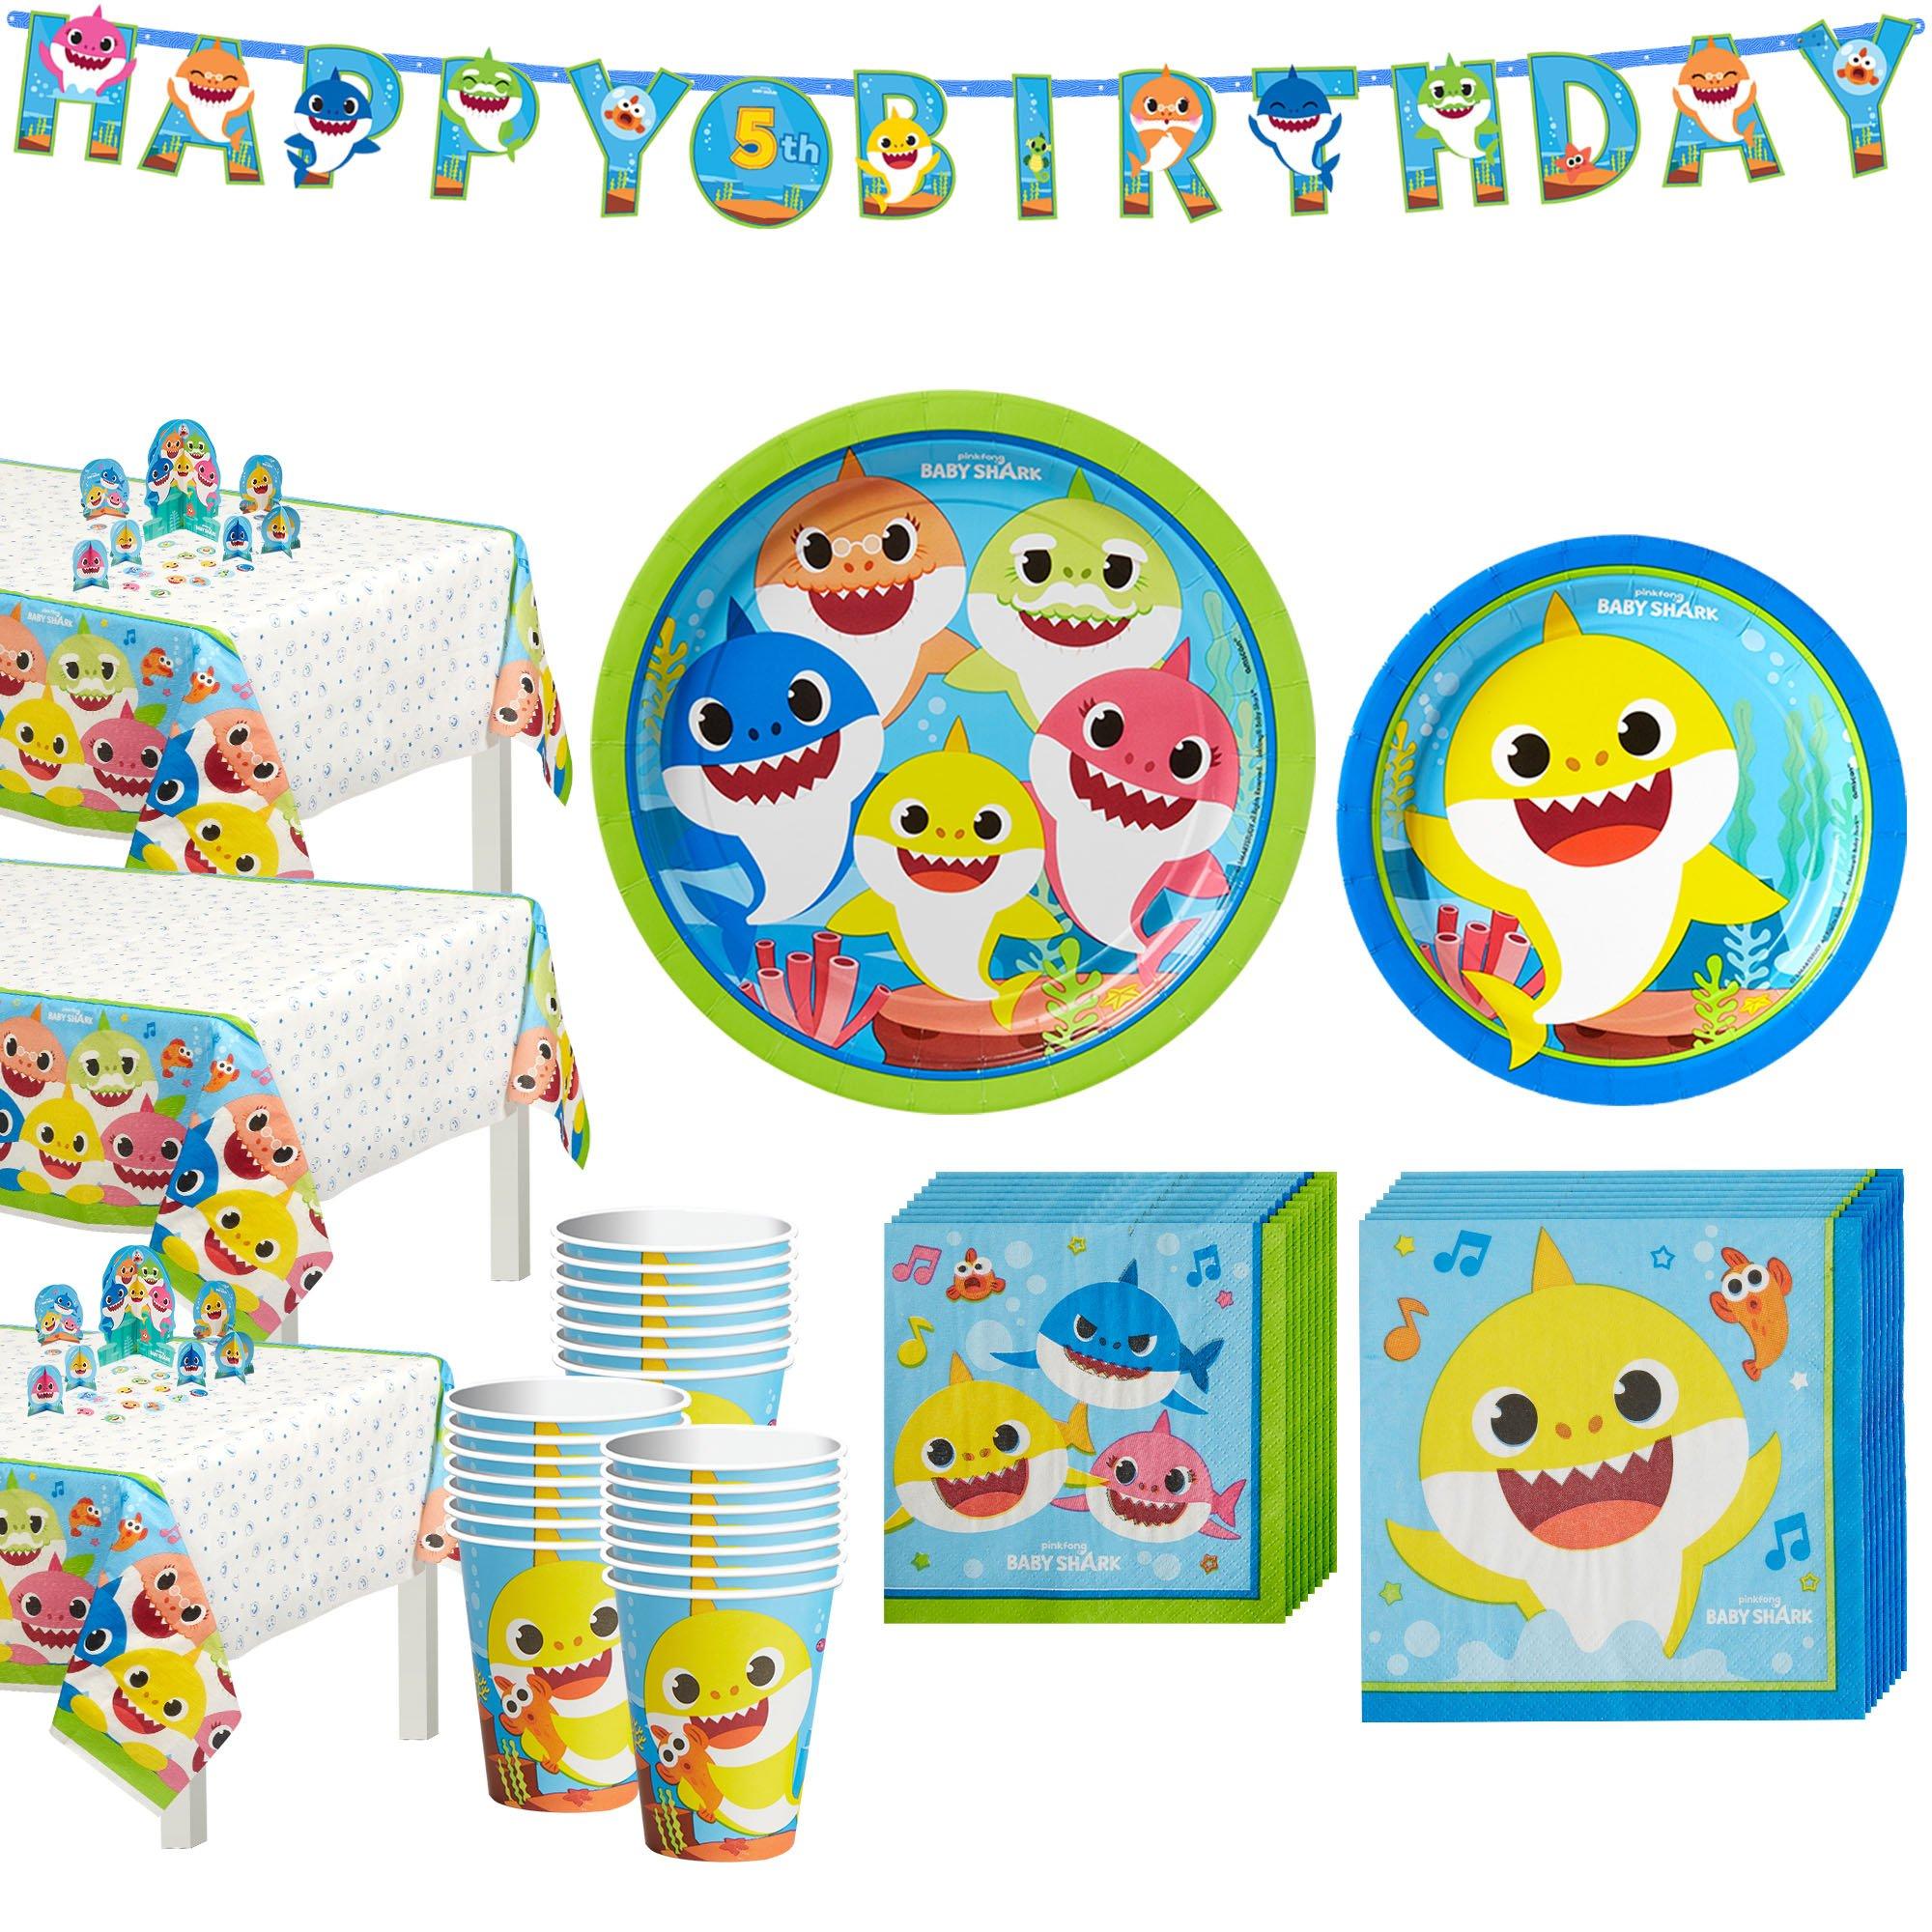 Baby Shower Invitation set - Baby Shark Theme - Party Printables